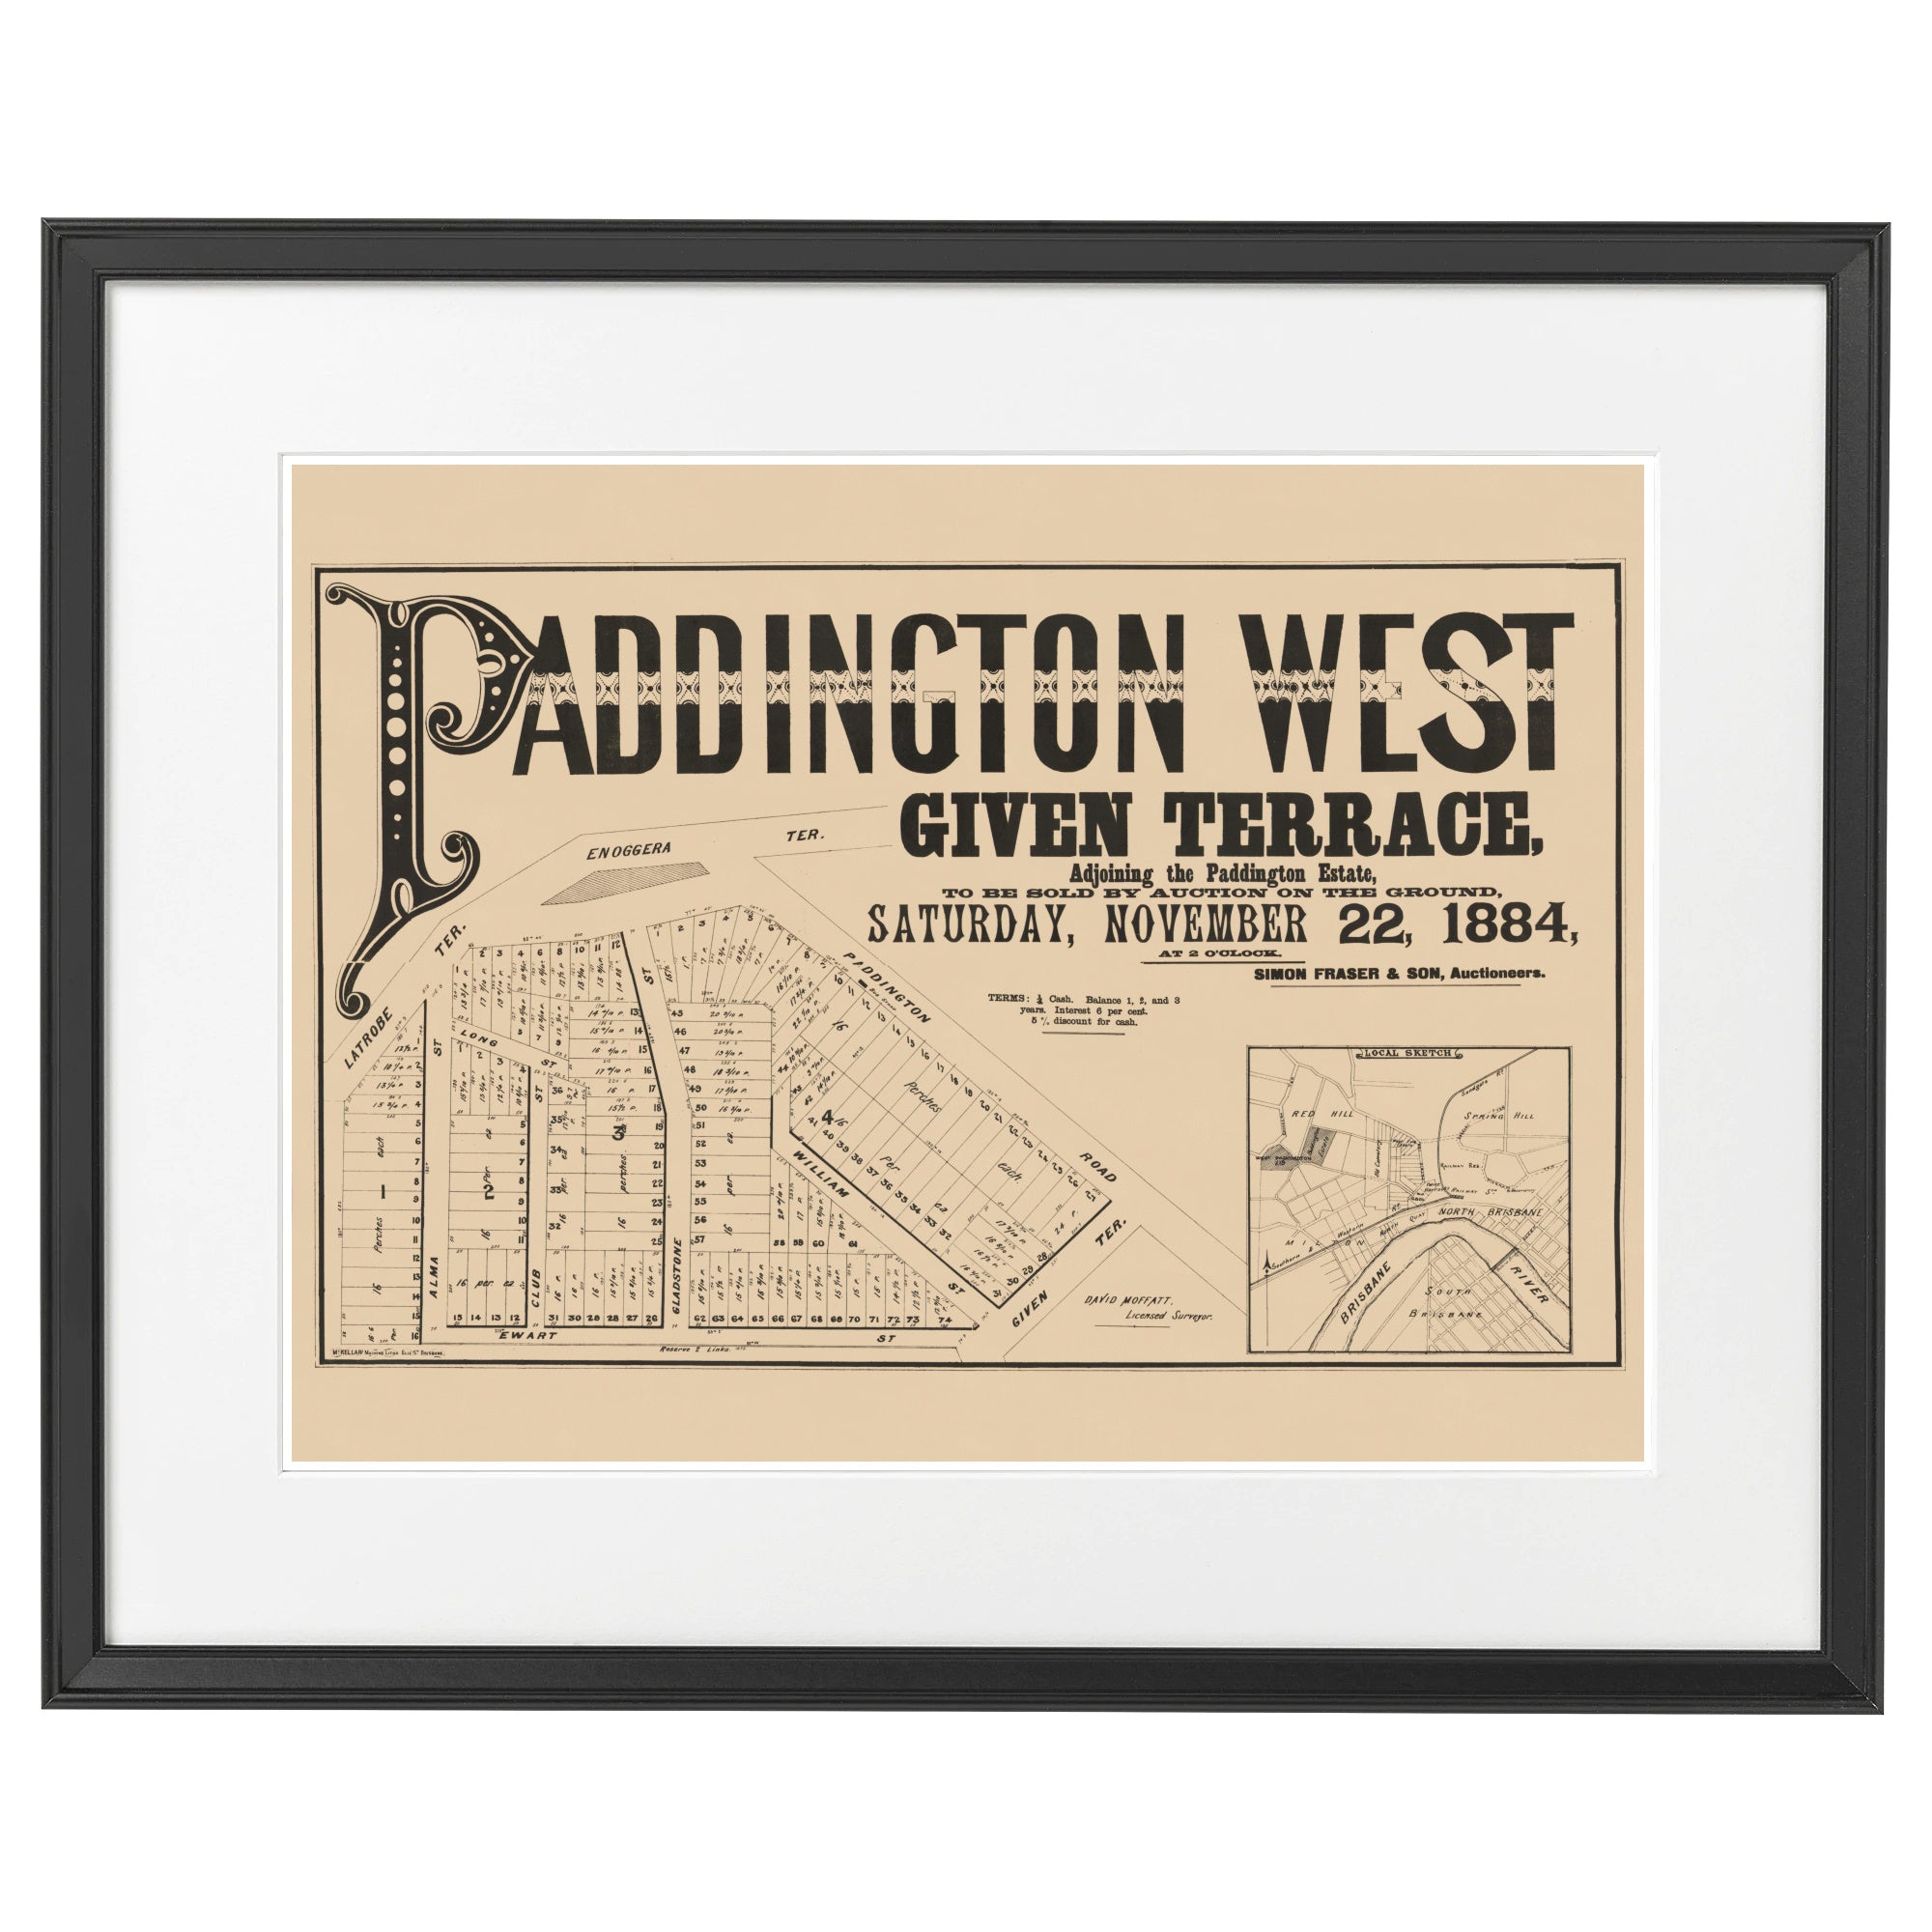 1884 Paddington West Estate - 138 years ago today